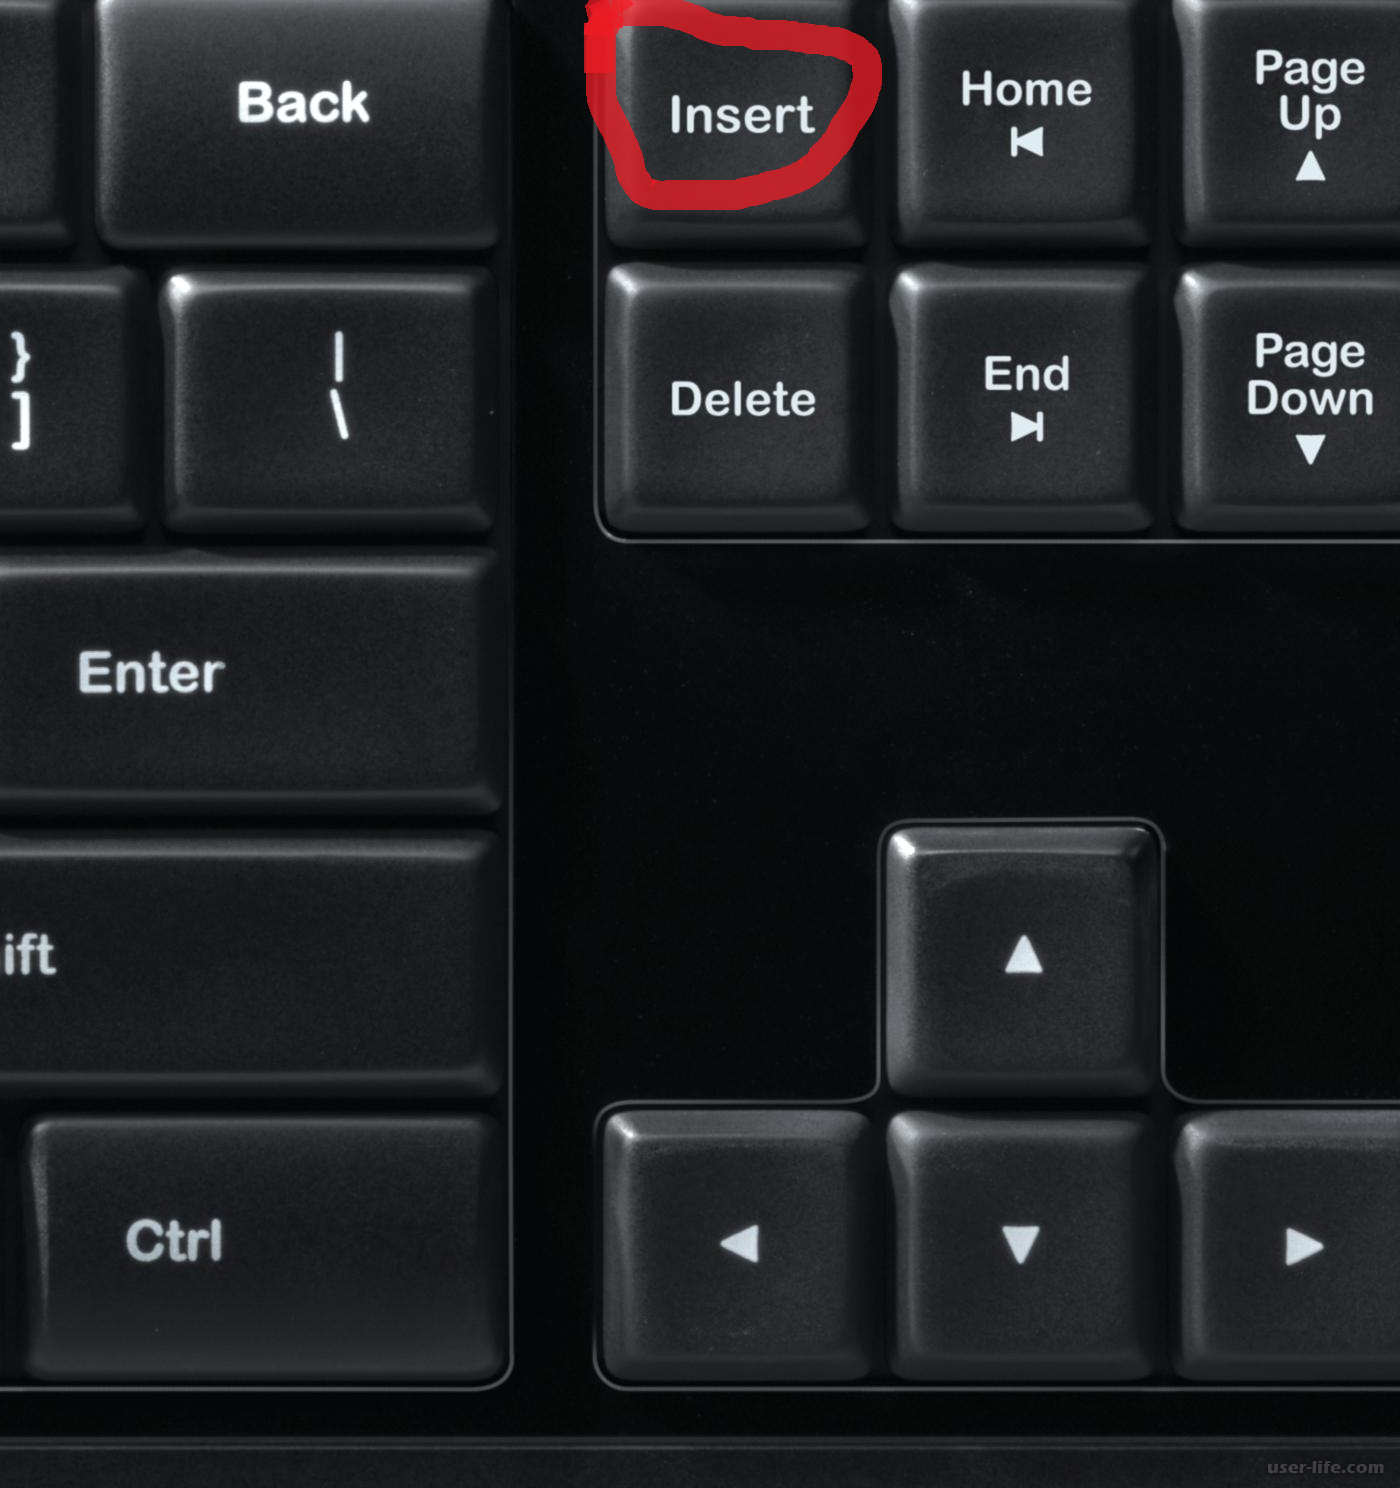 Нажать клавишу insert. Инсерт на клавиатуре. Кнопка инсерт на клавиатуре. Клавиша Insert на клавиатуре. Кнопка Insert на клавиатуре.